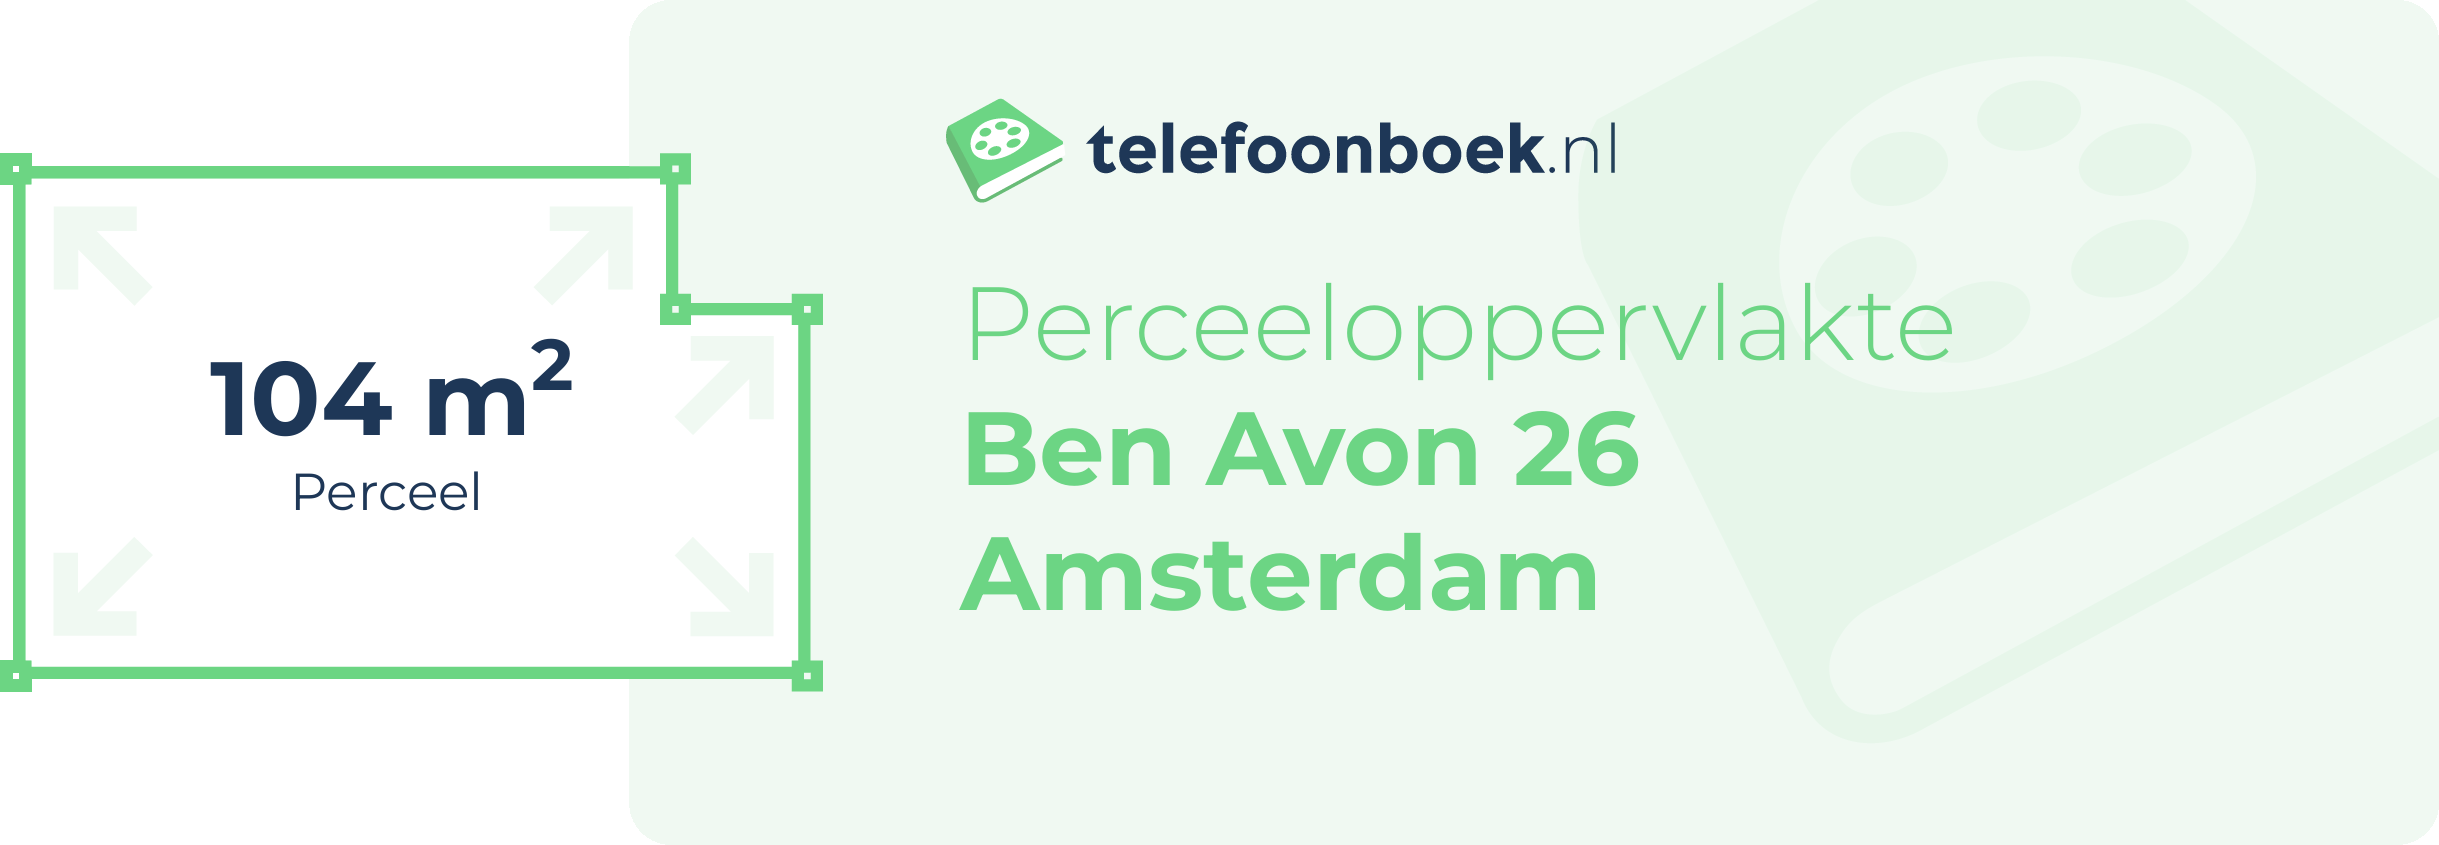 Perceeloppervlakte Ben Avon 26 Amsterdam